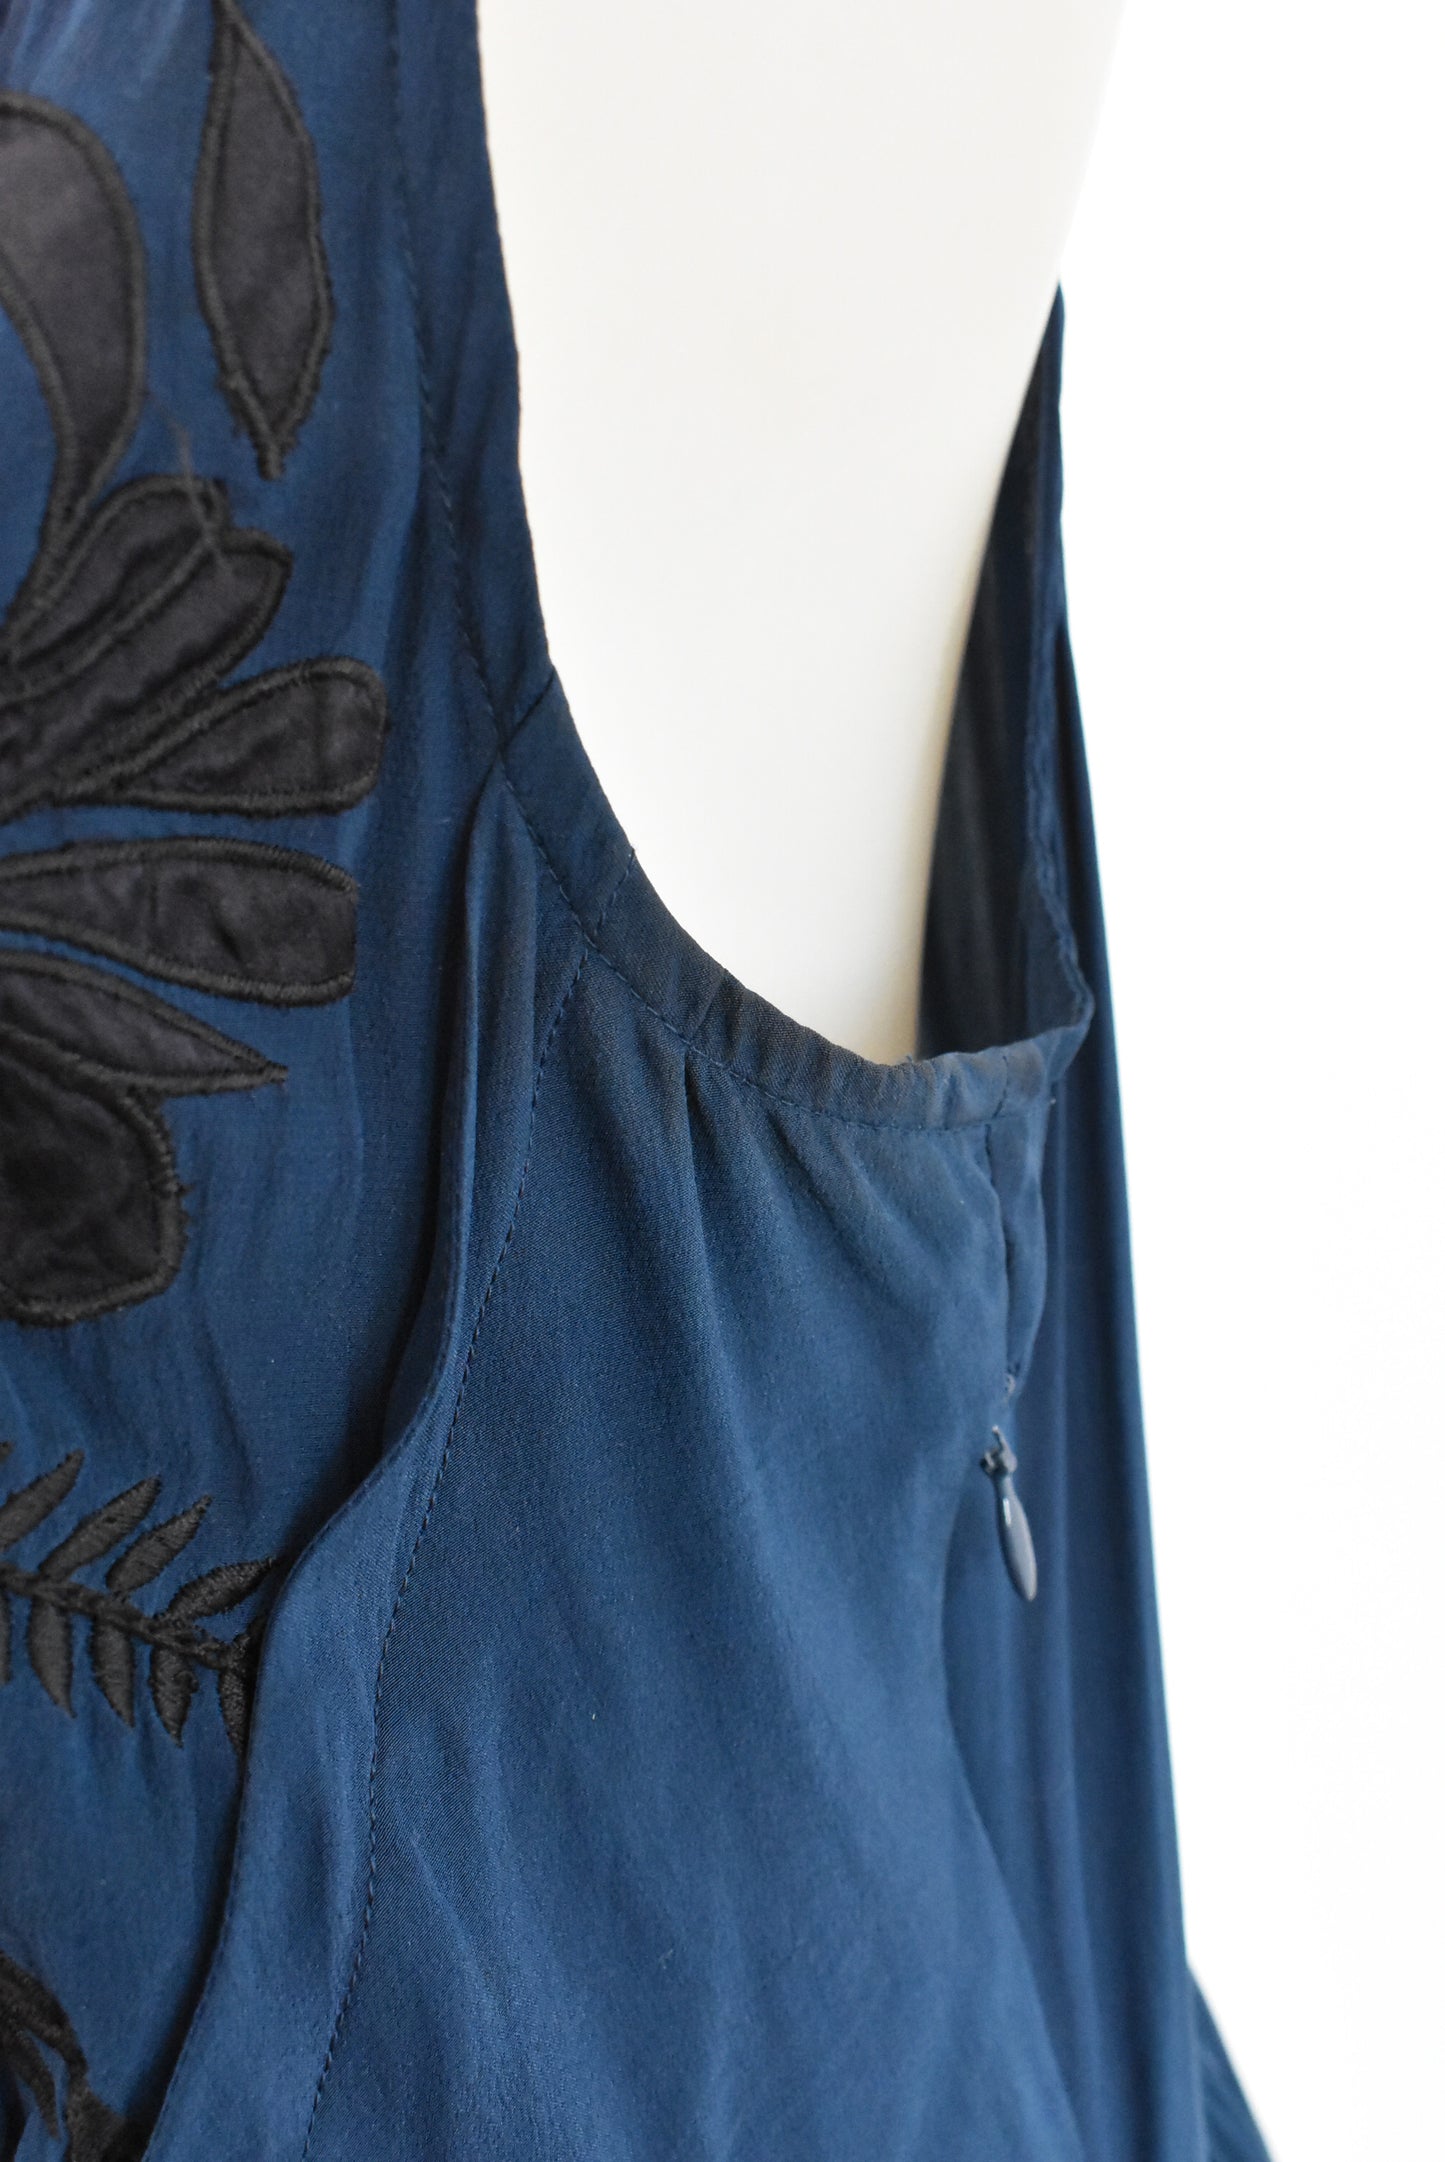 Trelise Cooper 100% silk dress with beaded bodice, 10